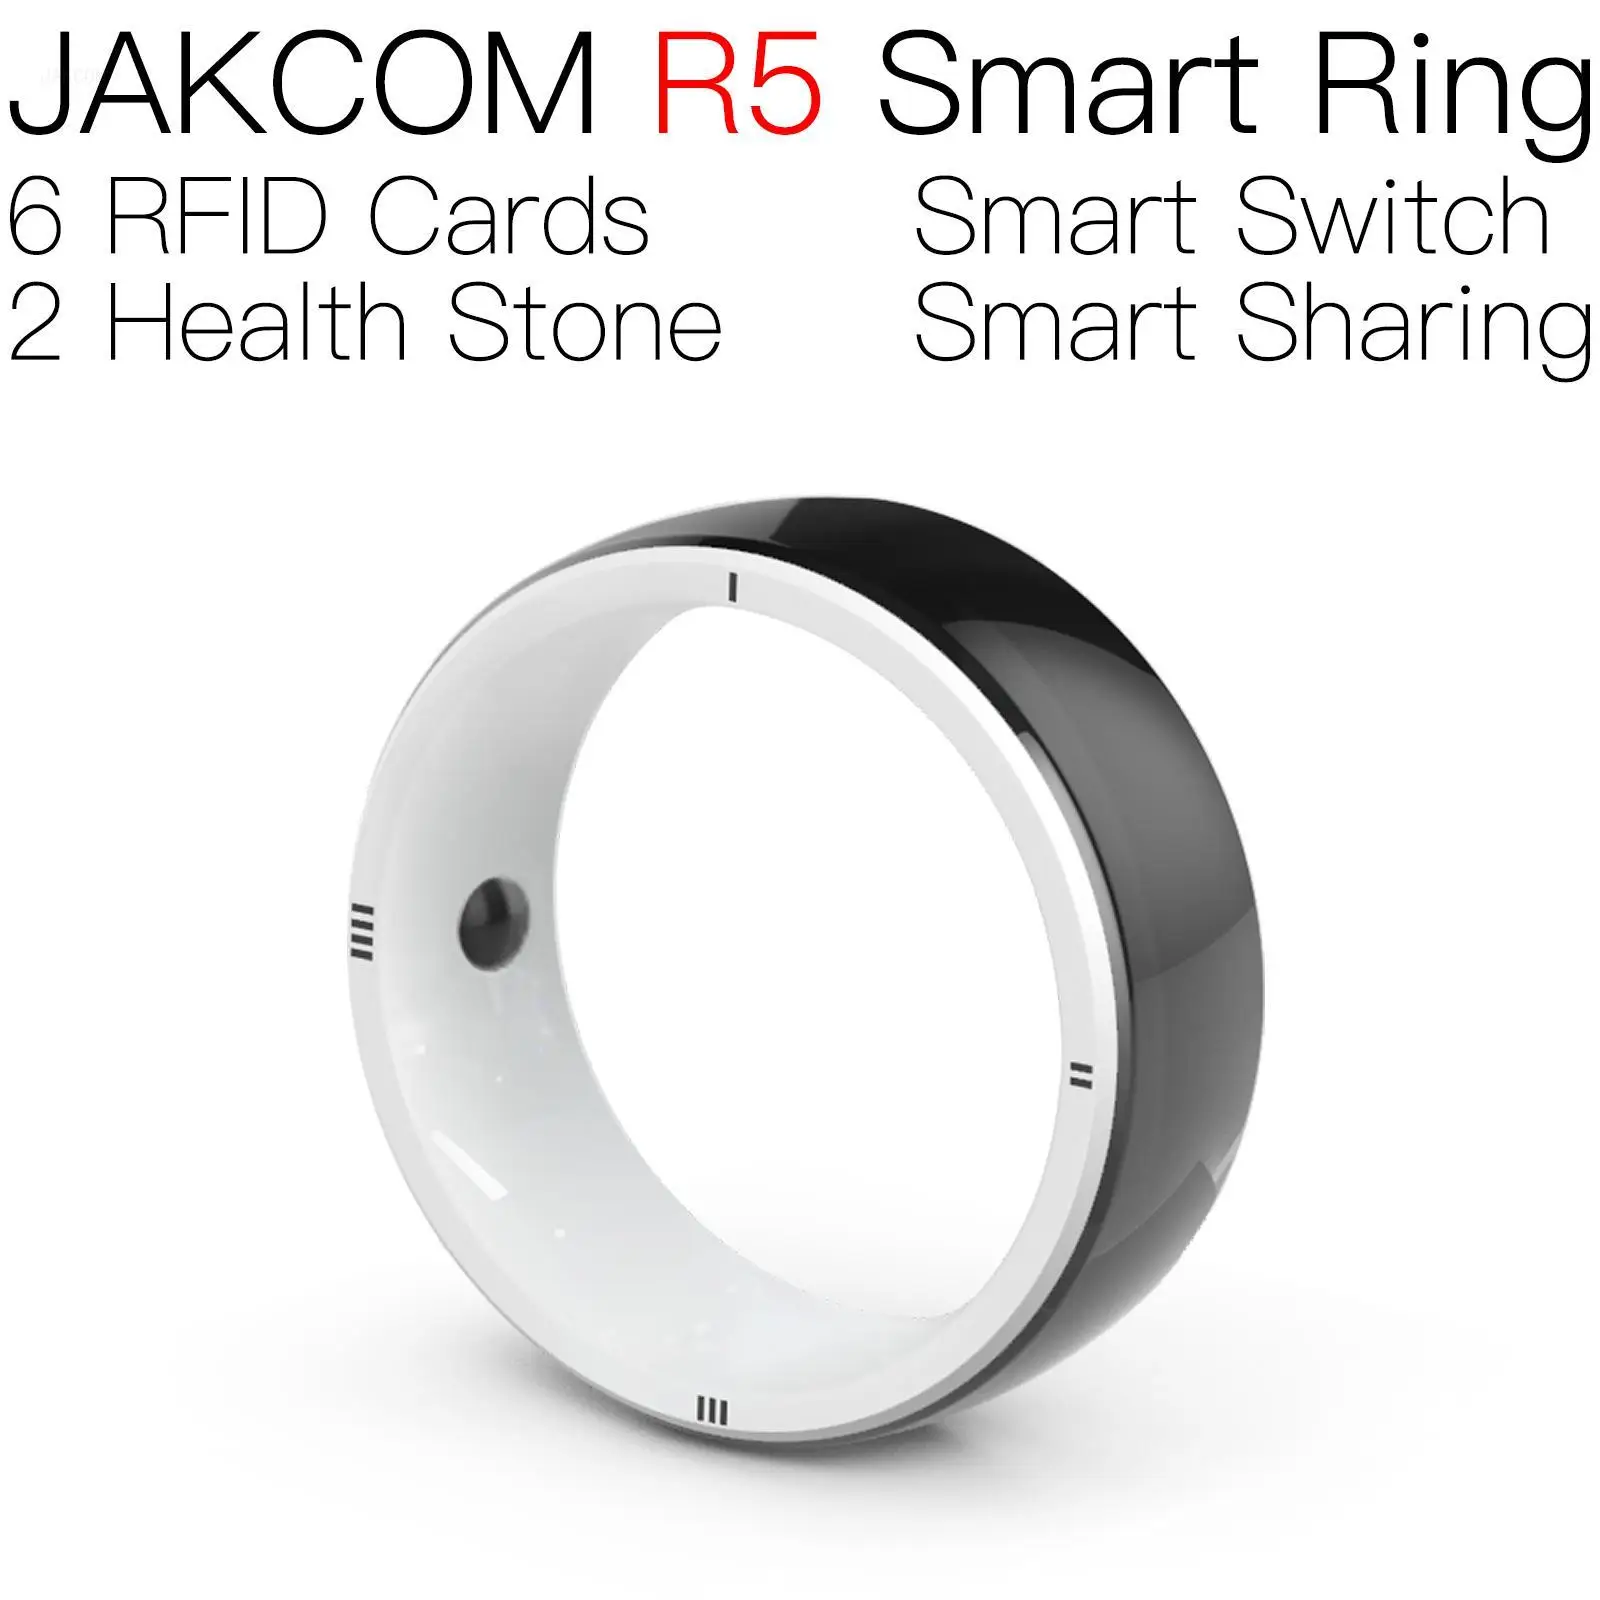 JAKCOM R5 Smart Ring better than alien in jar tag copy electra ic microchip syringe premium rfid vending nfc weareable